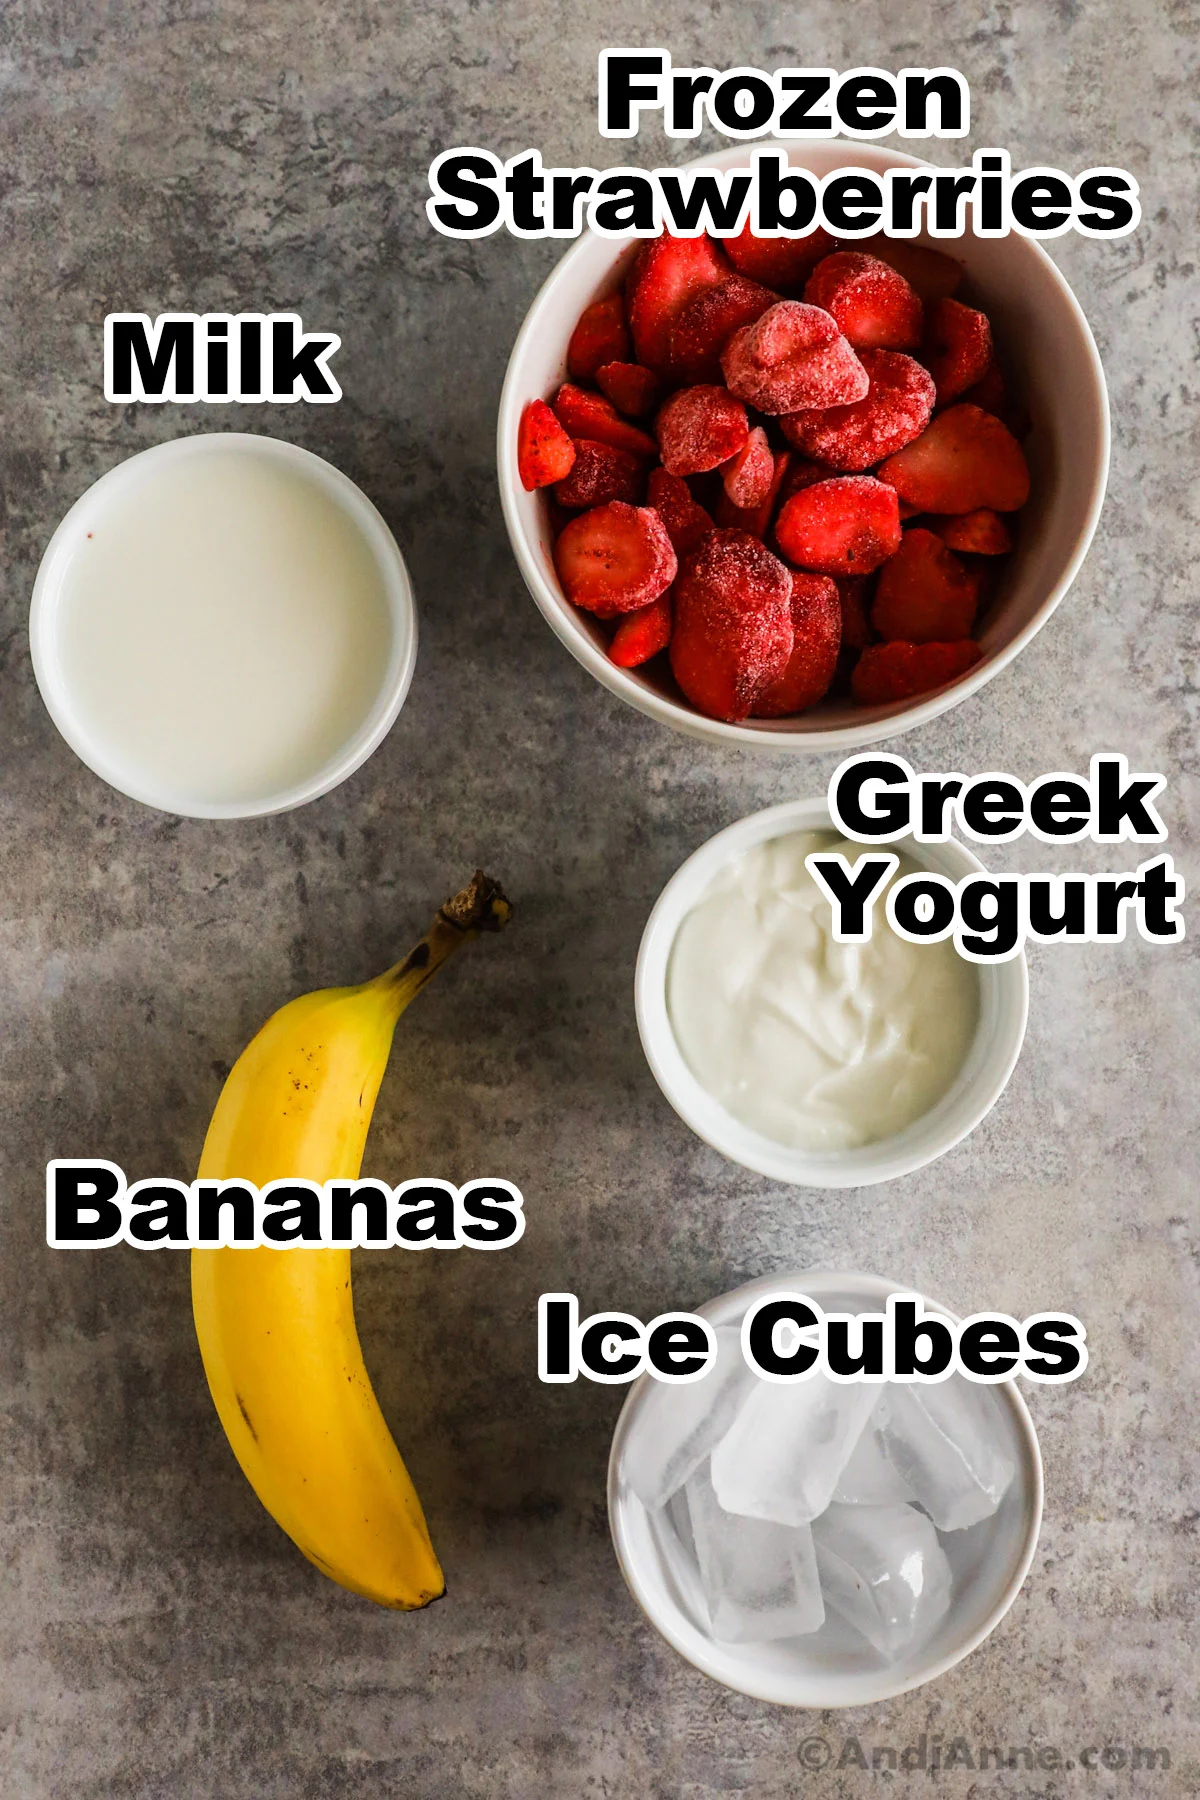 Bowls of frozen strawberries, milk, greek yogurt, a banana and ice cubes.